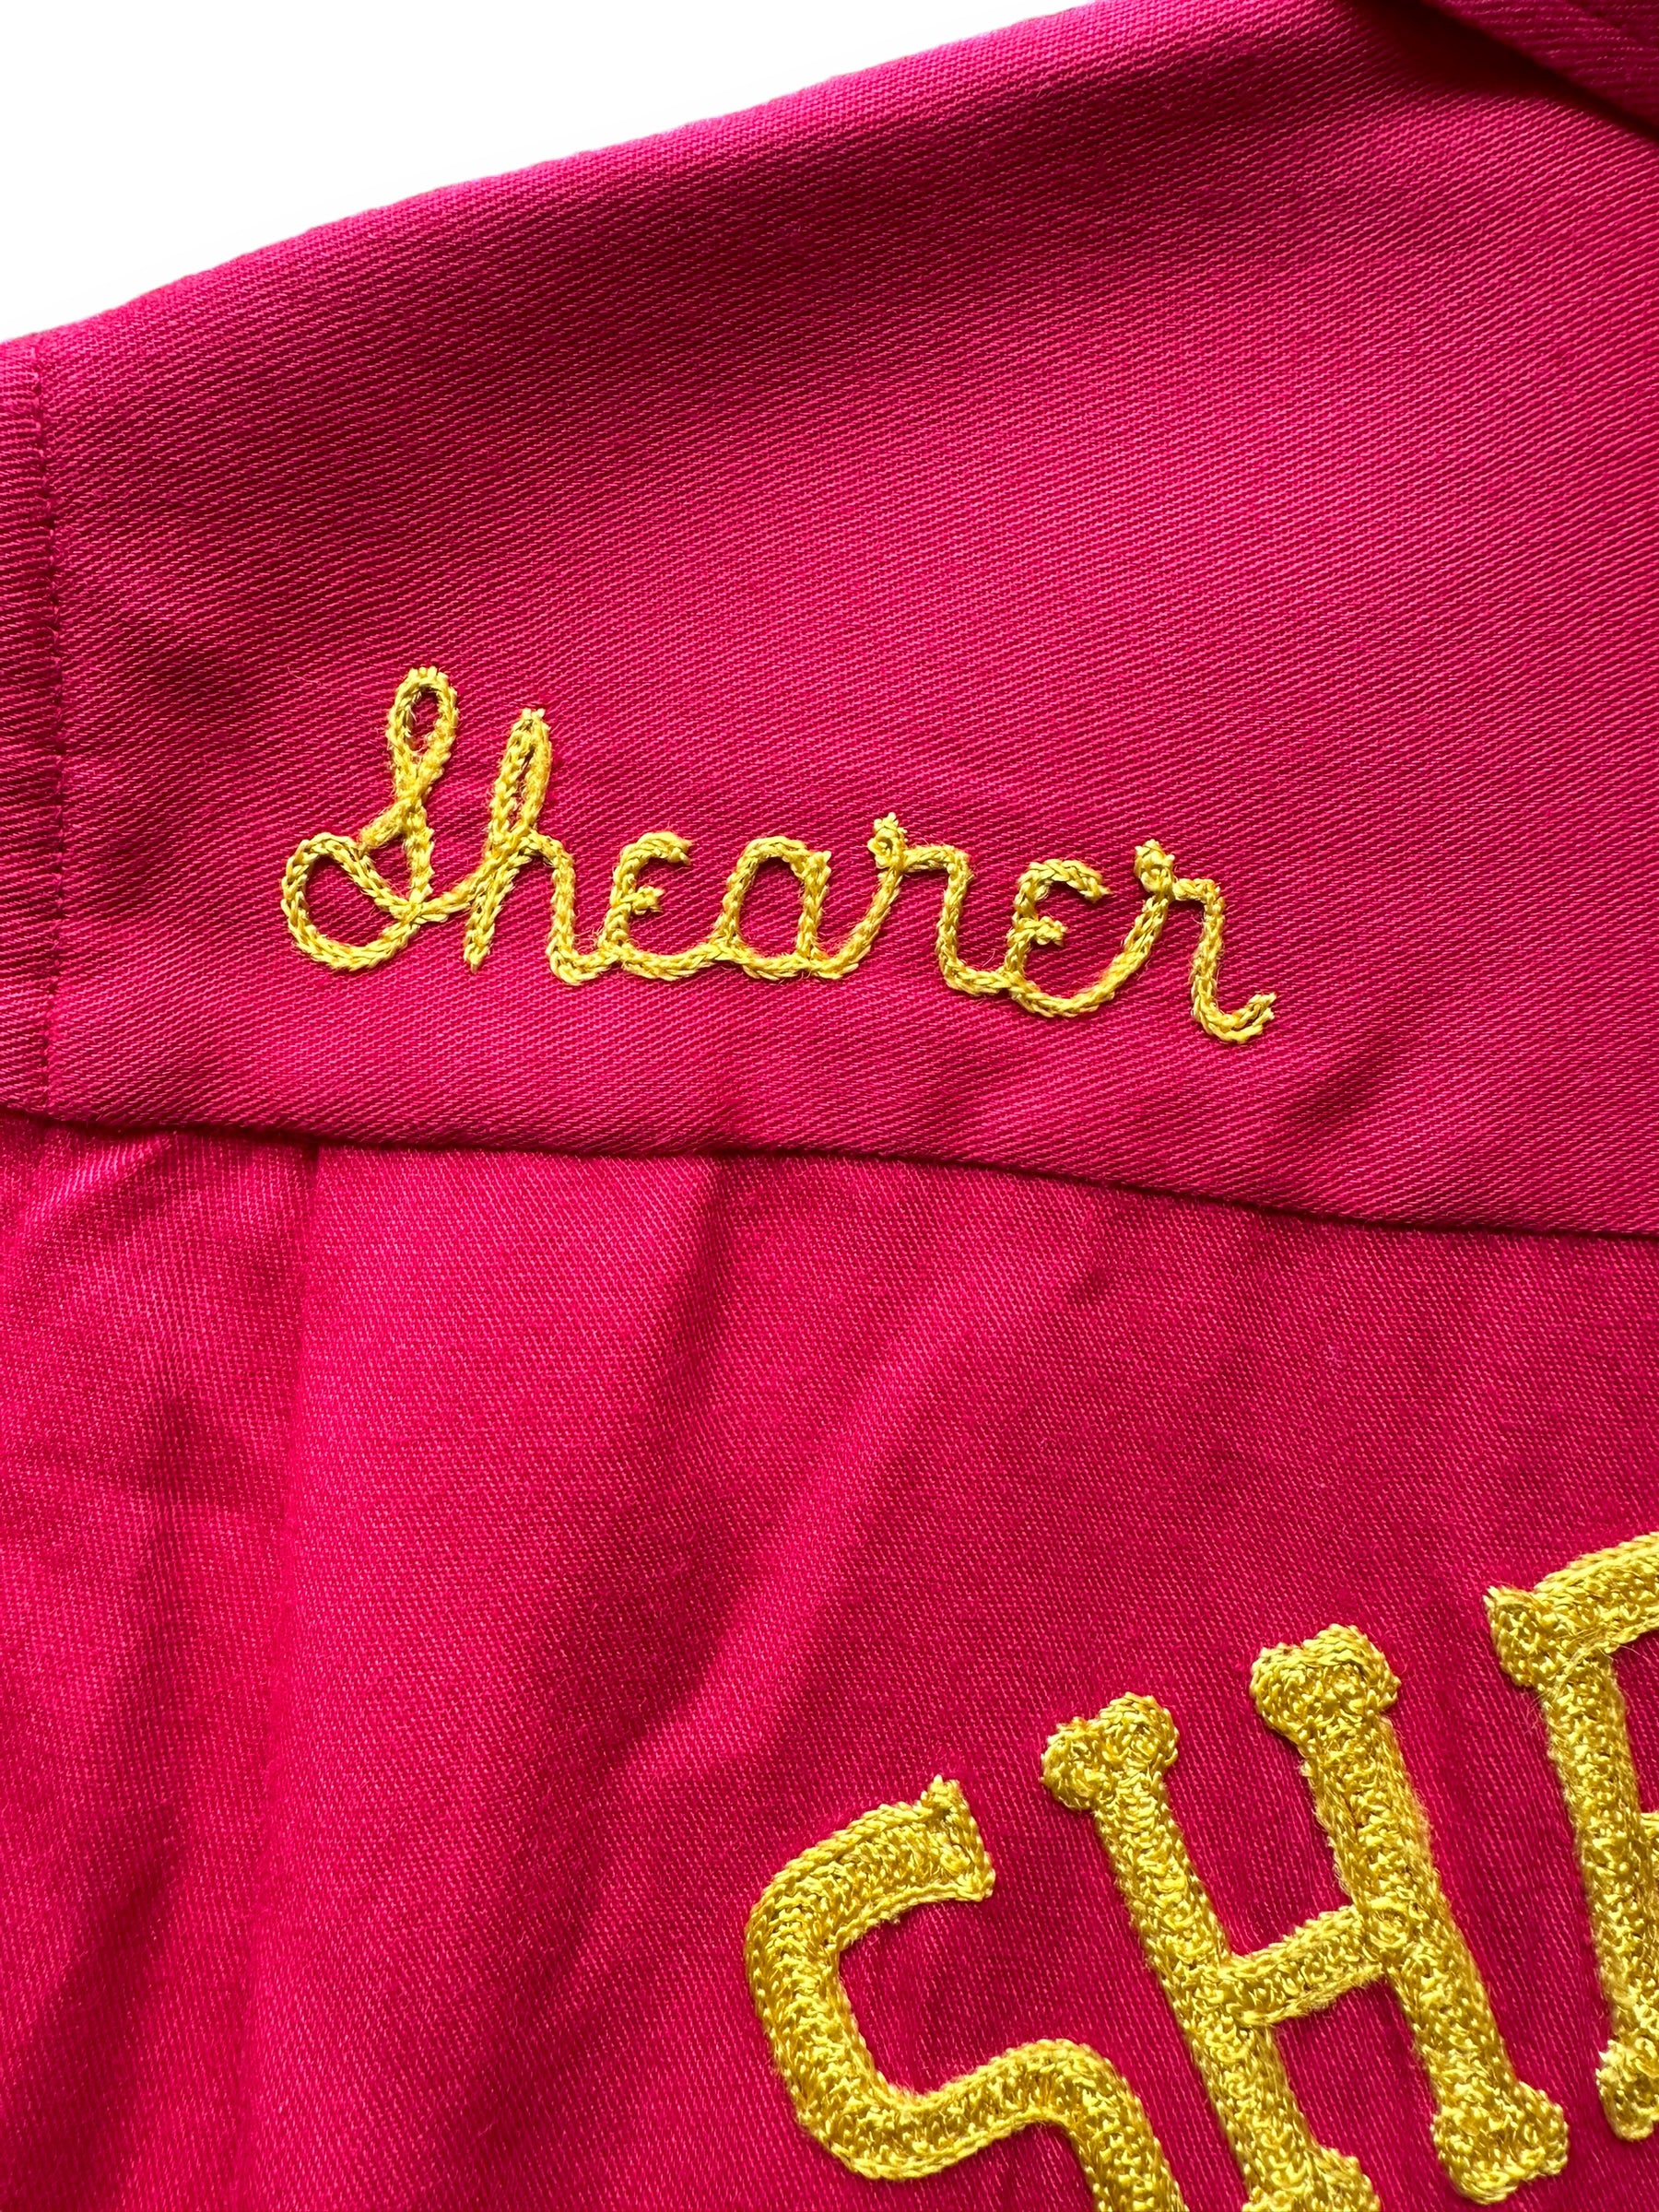 Back left stitching on Vintage "Shearer's Service Station" Chainstitched Bowling Shirt SZ M | Vintage Bowling Shirt Seattle | Barn Owl Vintage Seattle